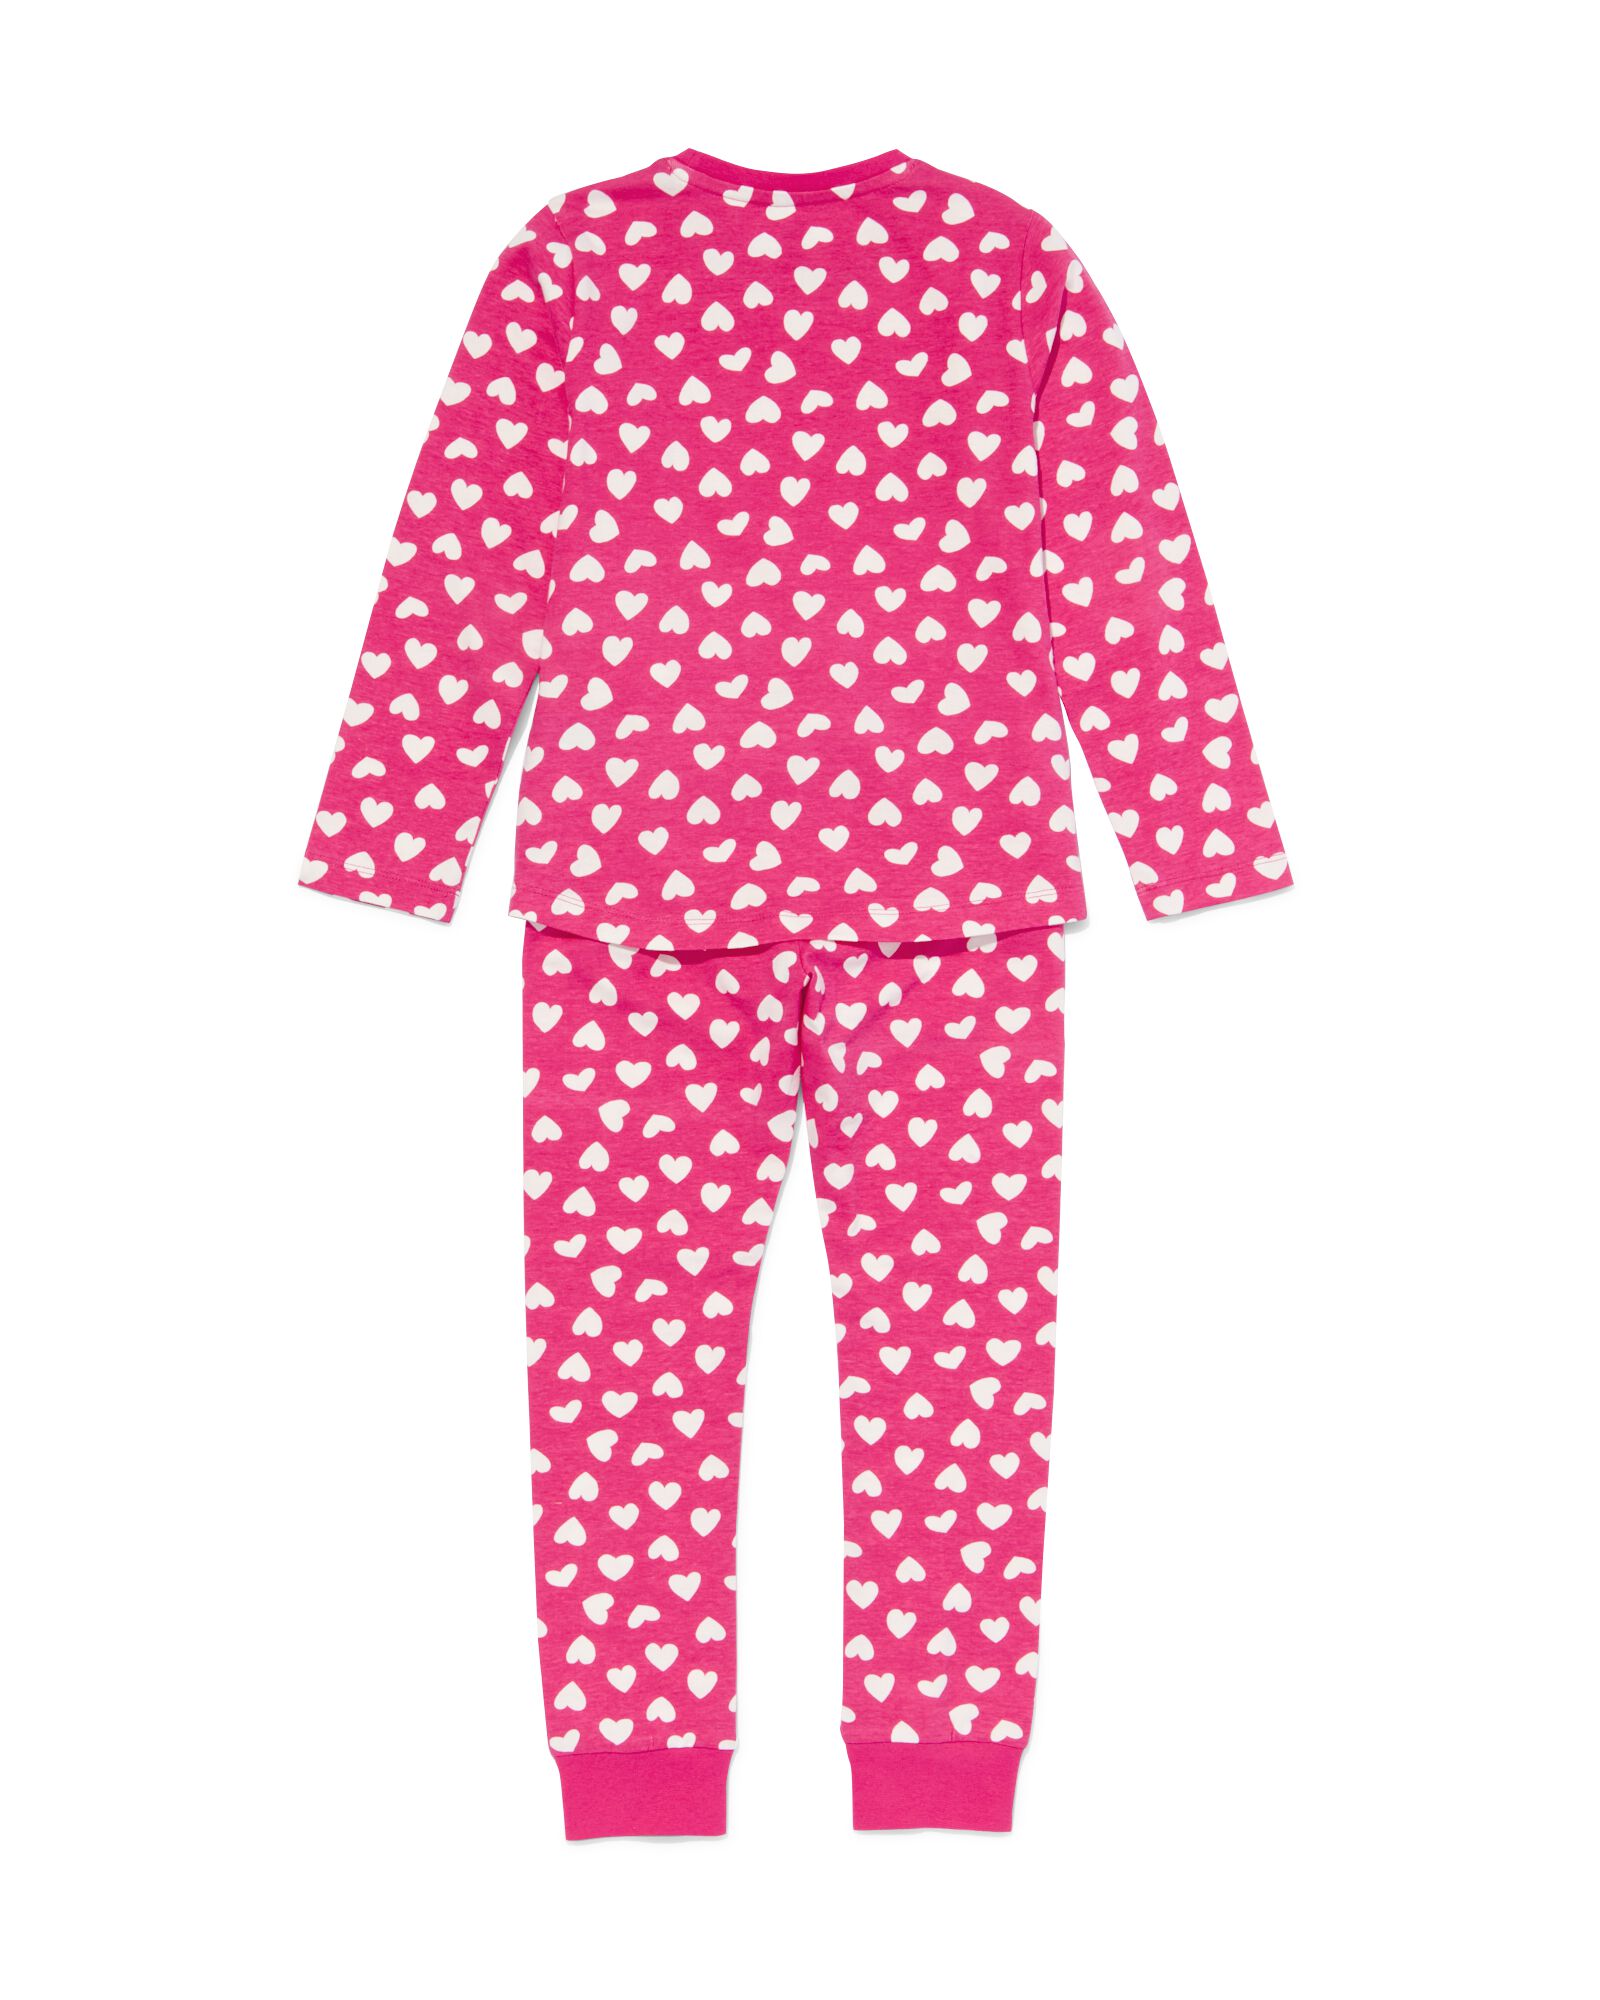 Kinder-Pyjama, Herzen knallrosa 98/104 - 23092782 - HEMA